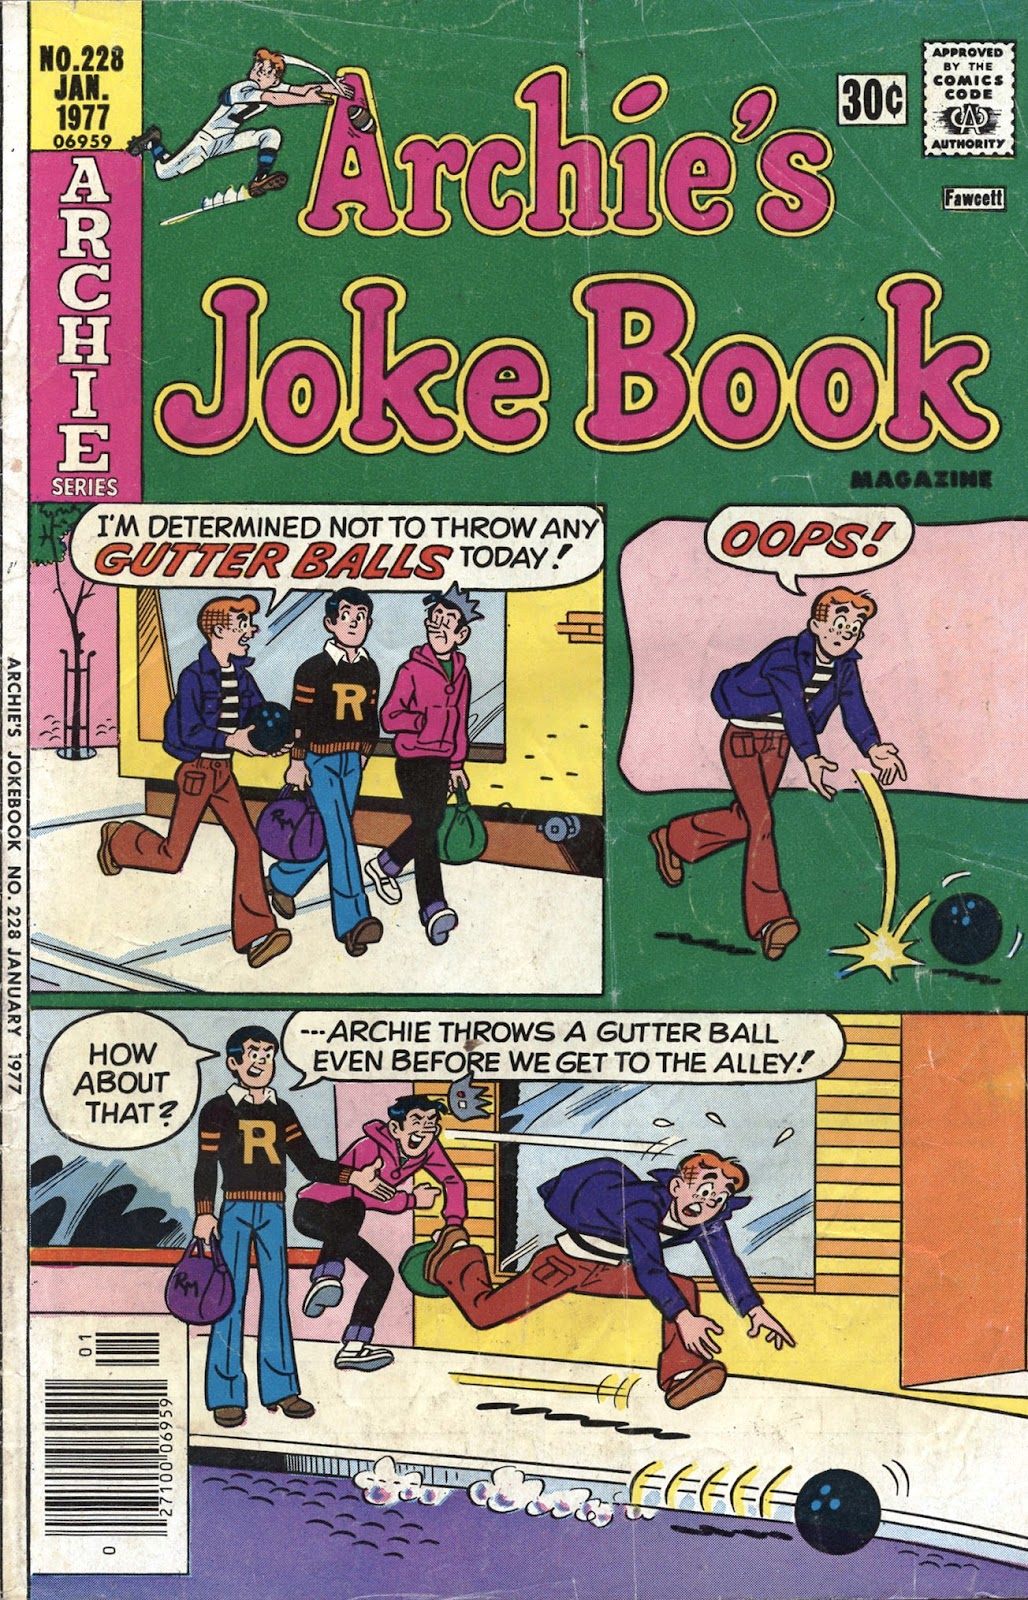 Archie's Joke Book Magazine 228 Page 1